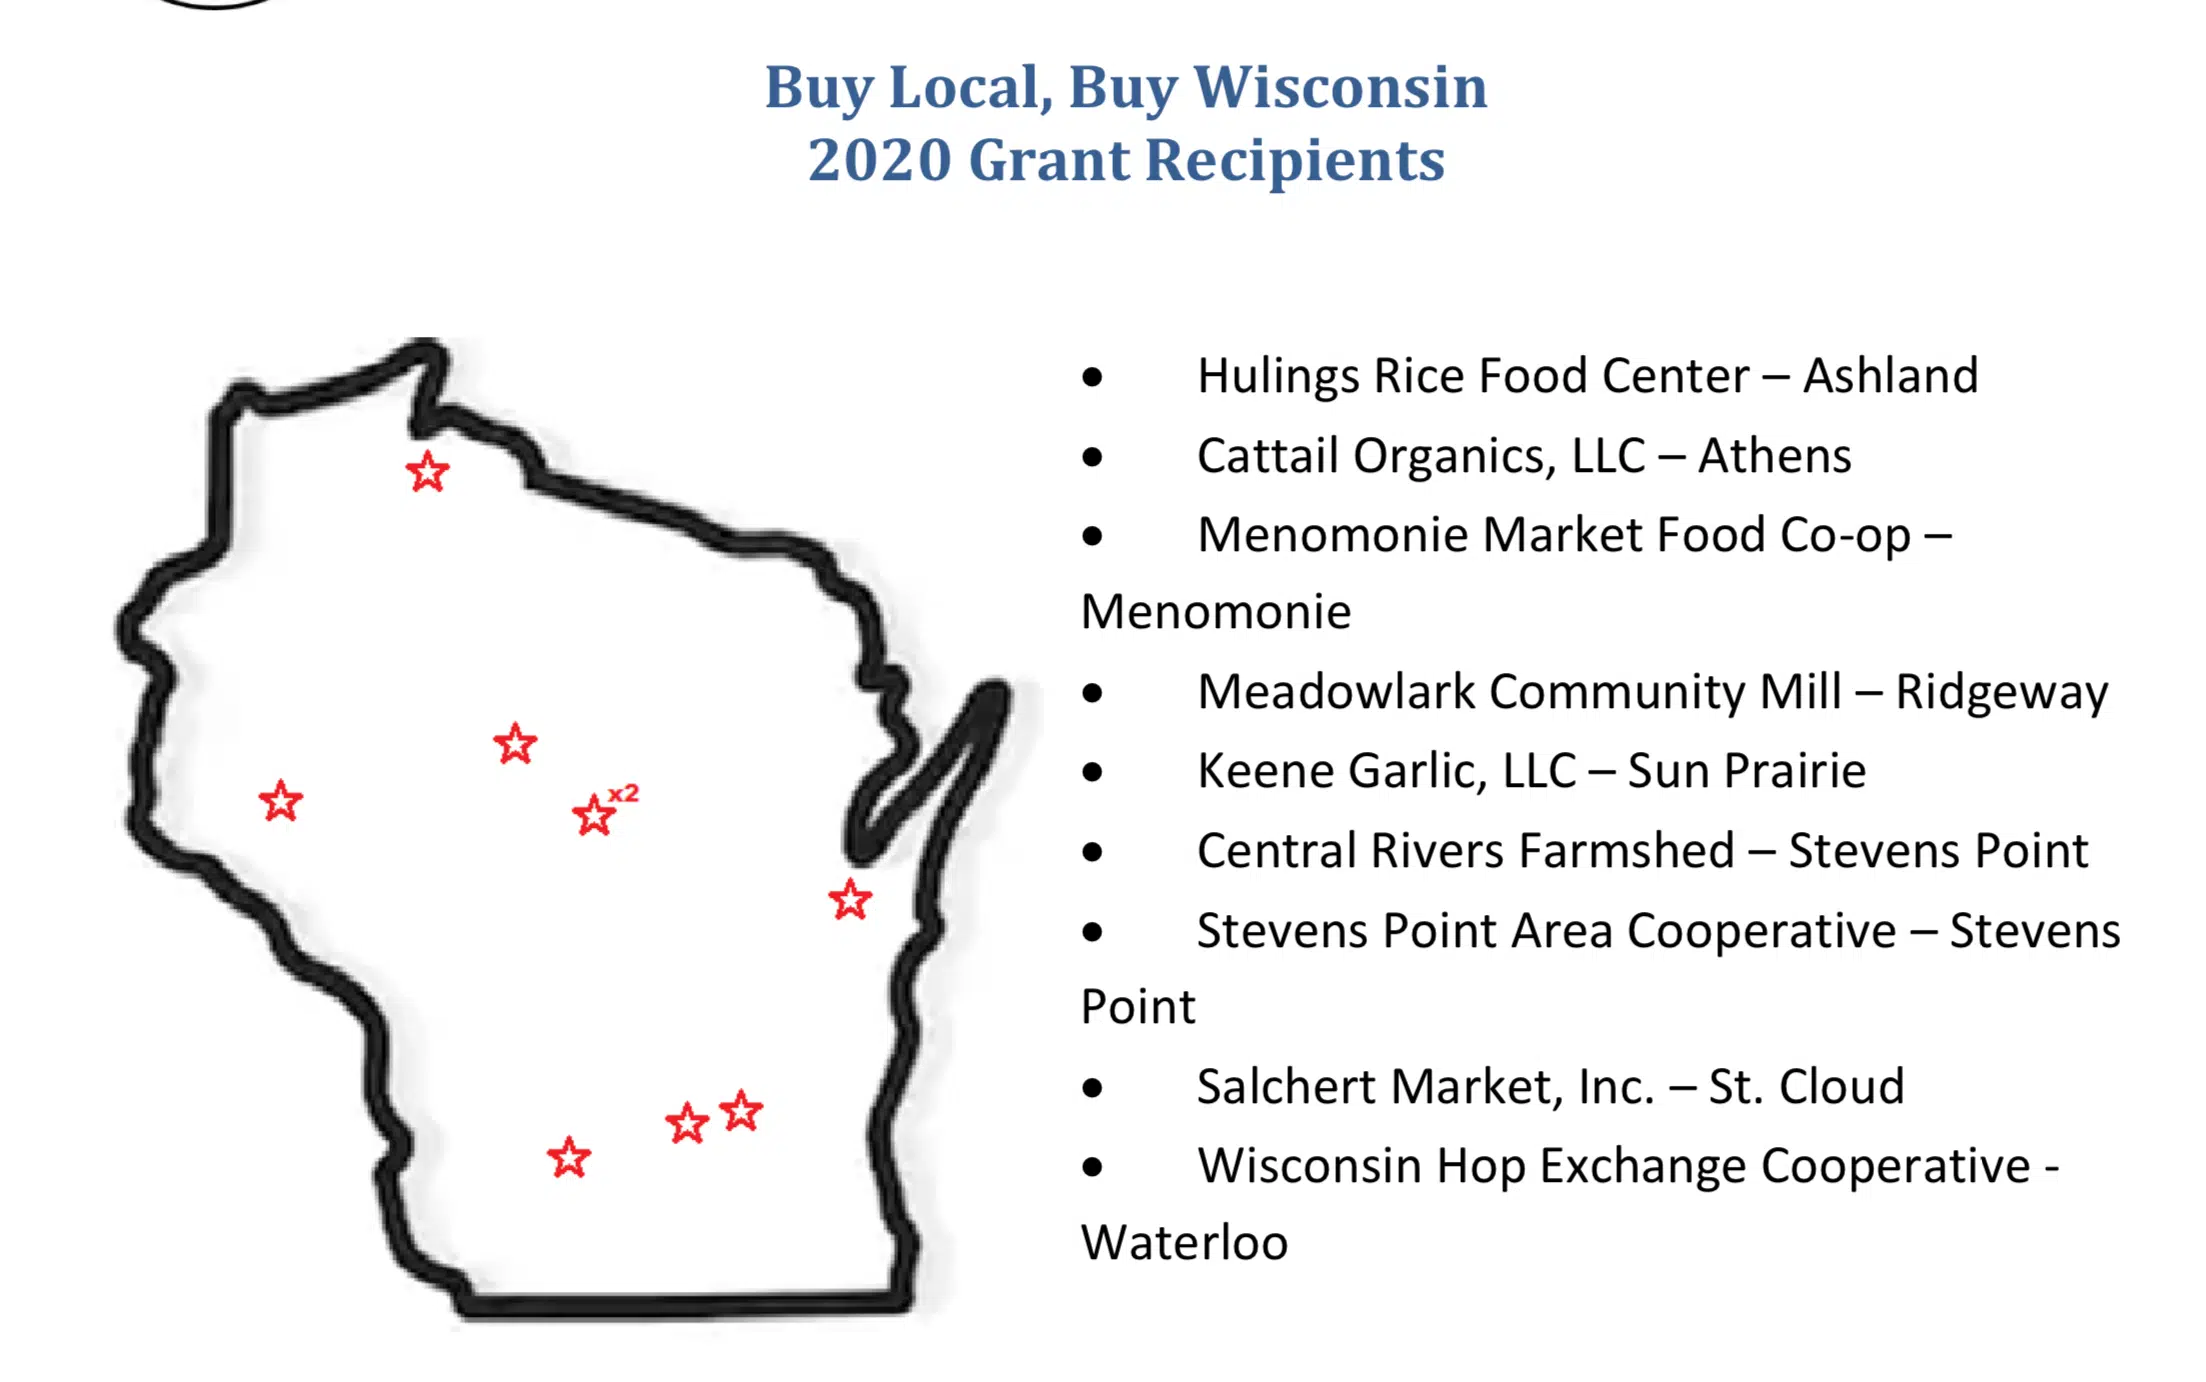 Buy Local, Buy Wisconsin Grant Recipients Announced